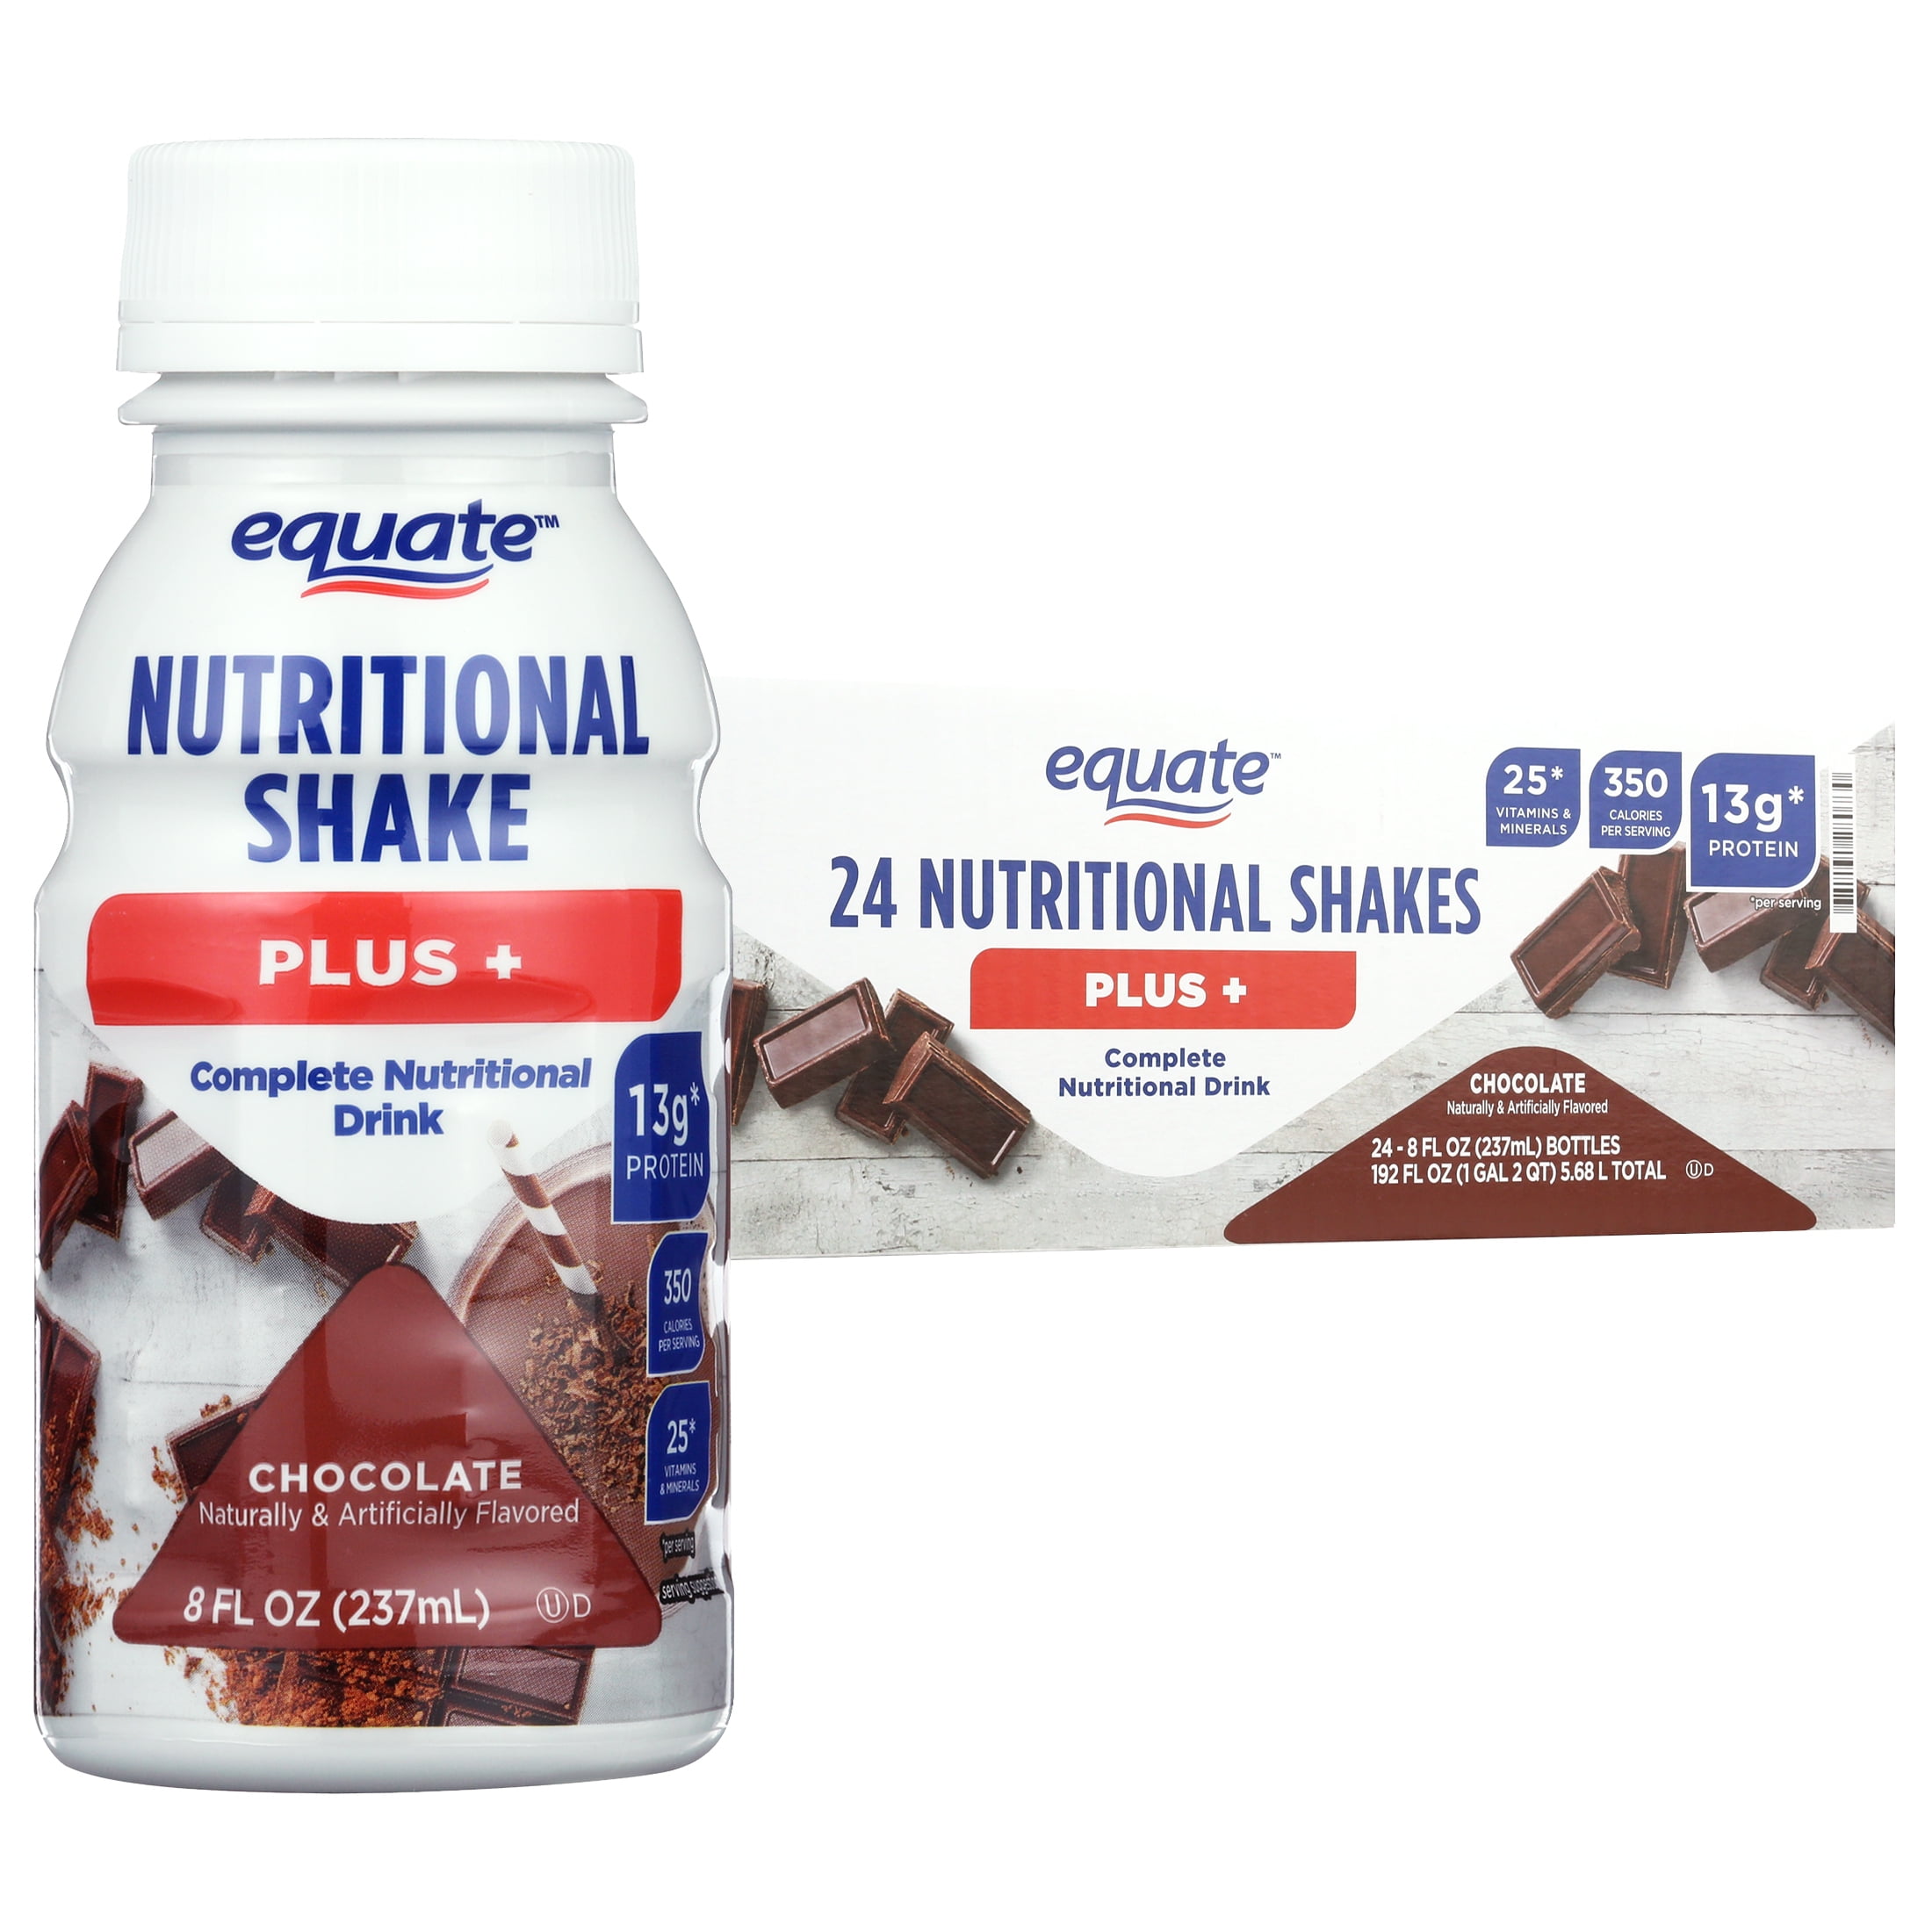 Equate Nutritional Shake Plus, Chocolate, 8 fl oz, 24 Count